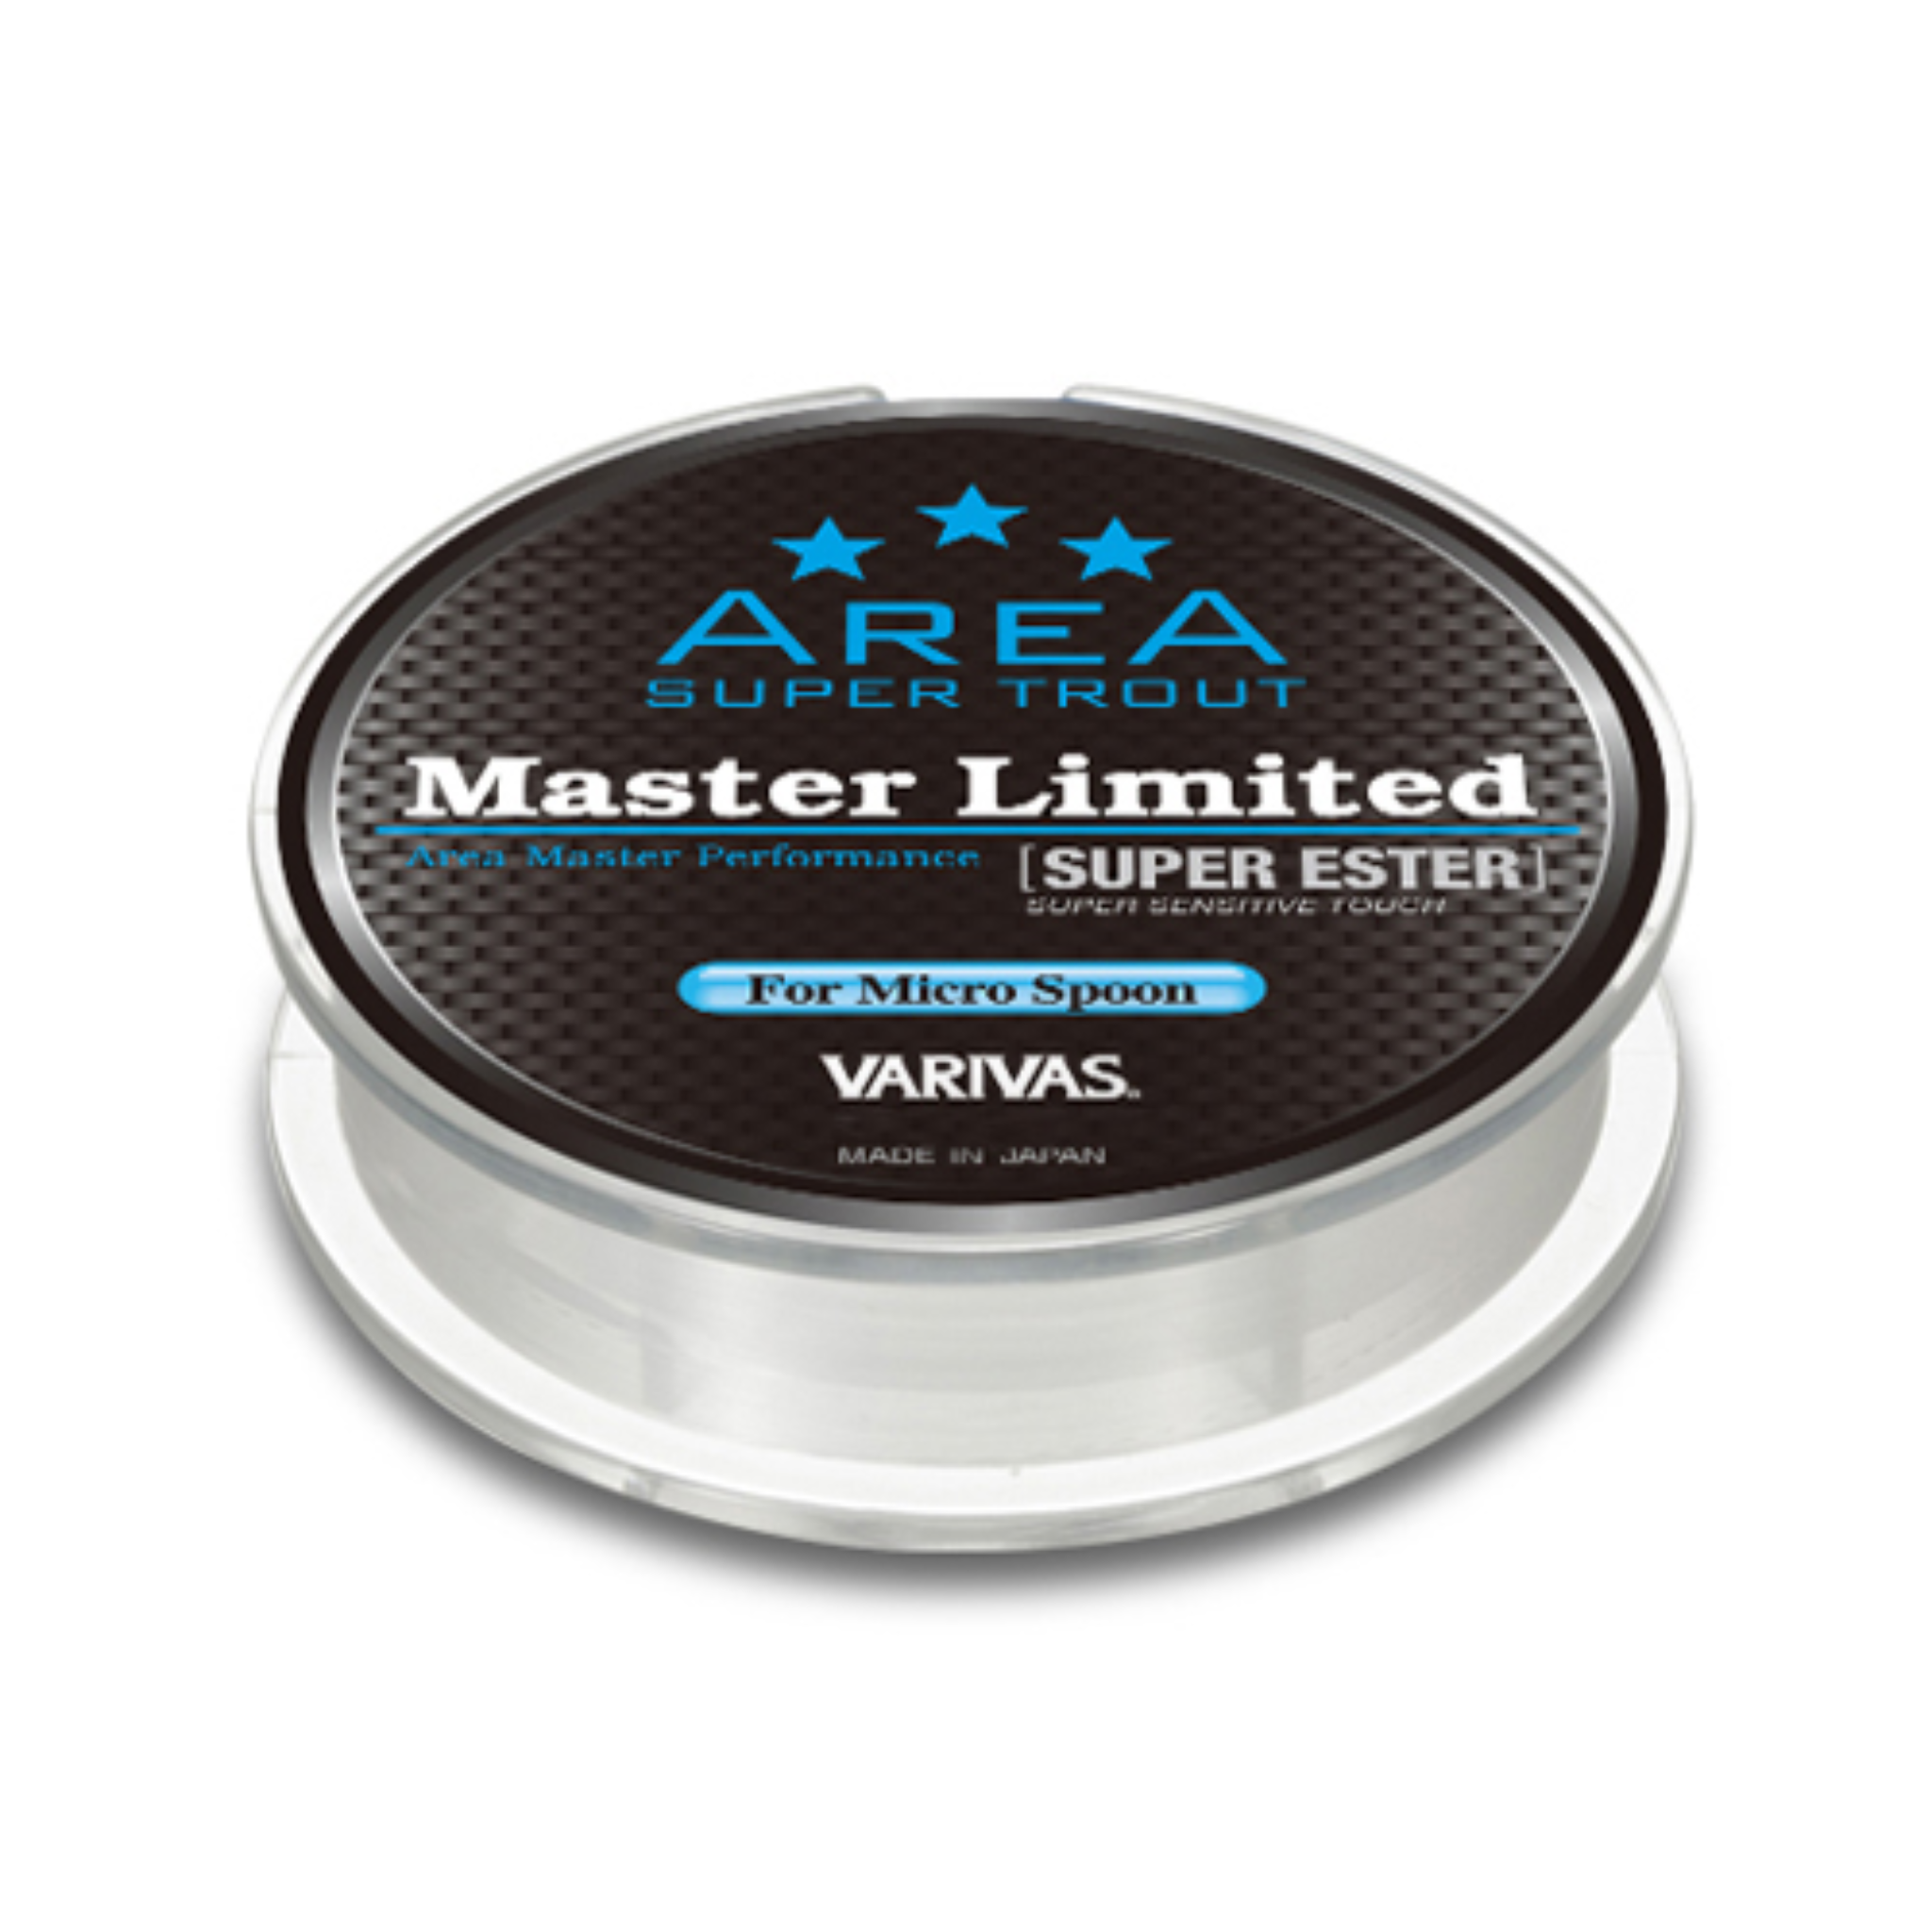 VARIVAS    Super Trout Area Master Limited [Super Ester]